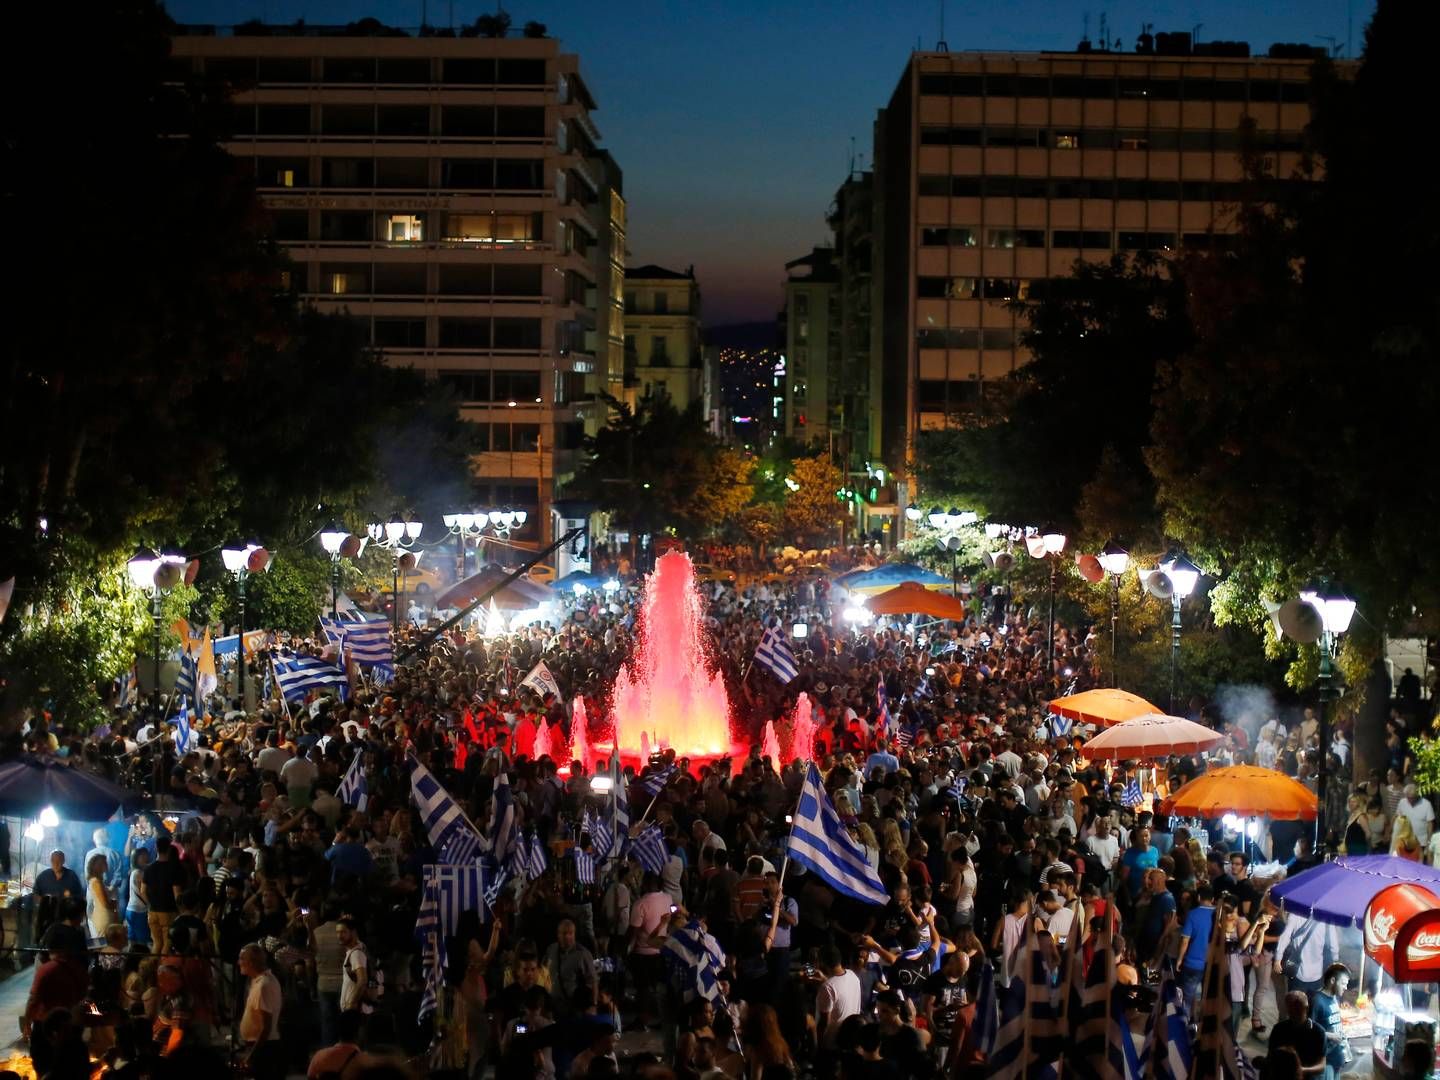 Voters celebrate 'no' in referendum vote Sunday night in Athens. | Photo: Emilio Morenatti/AP/POLFOTO